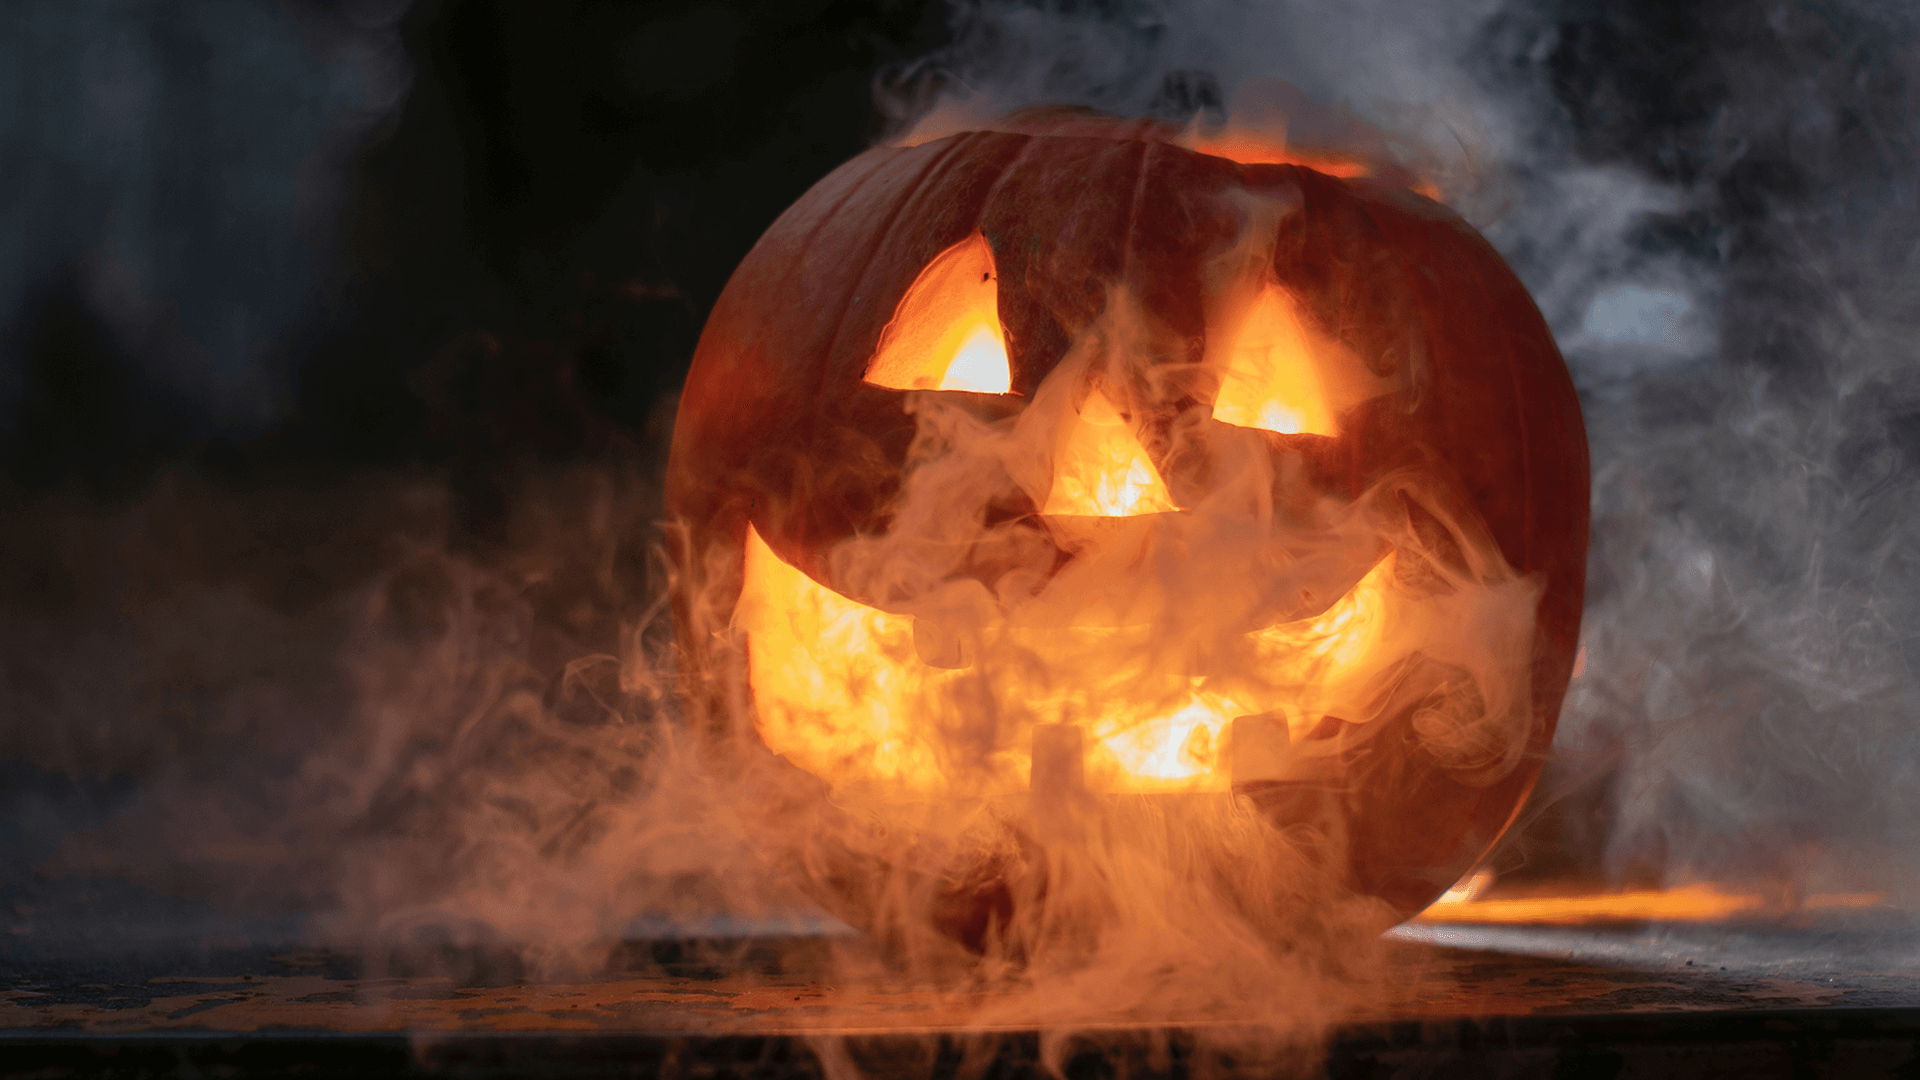 Spooky jack o' lantern image for halloween wallpaper